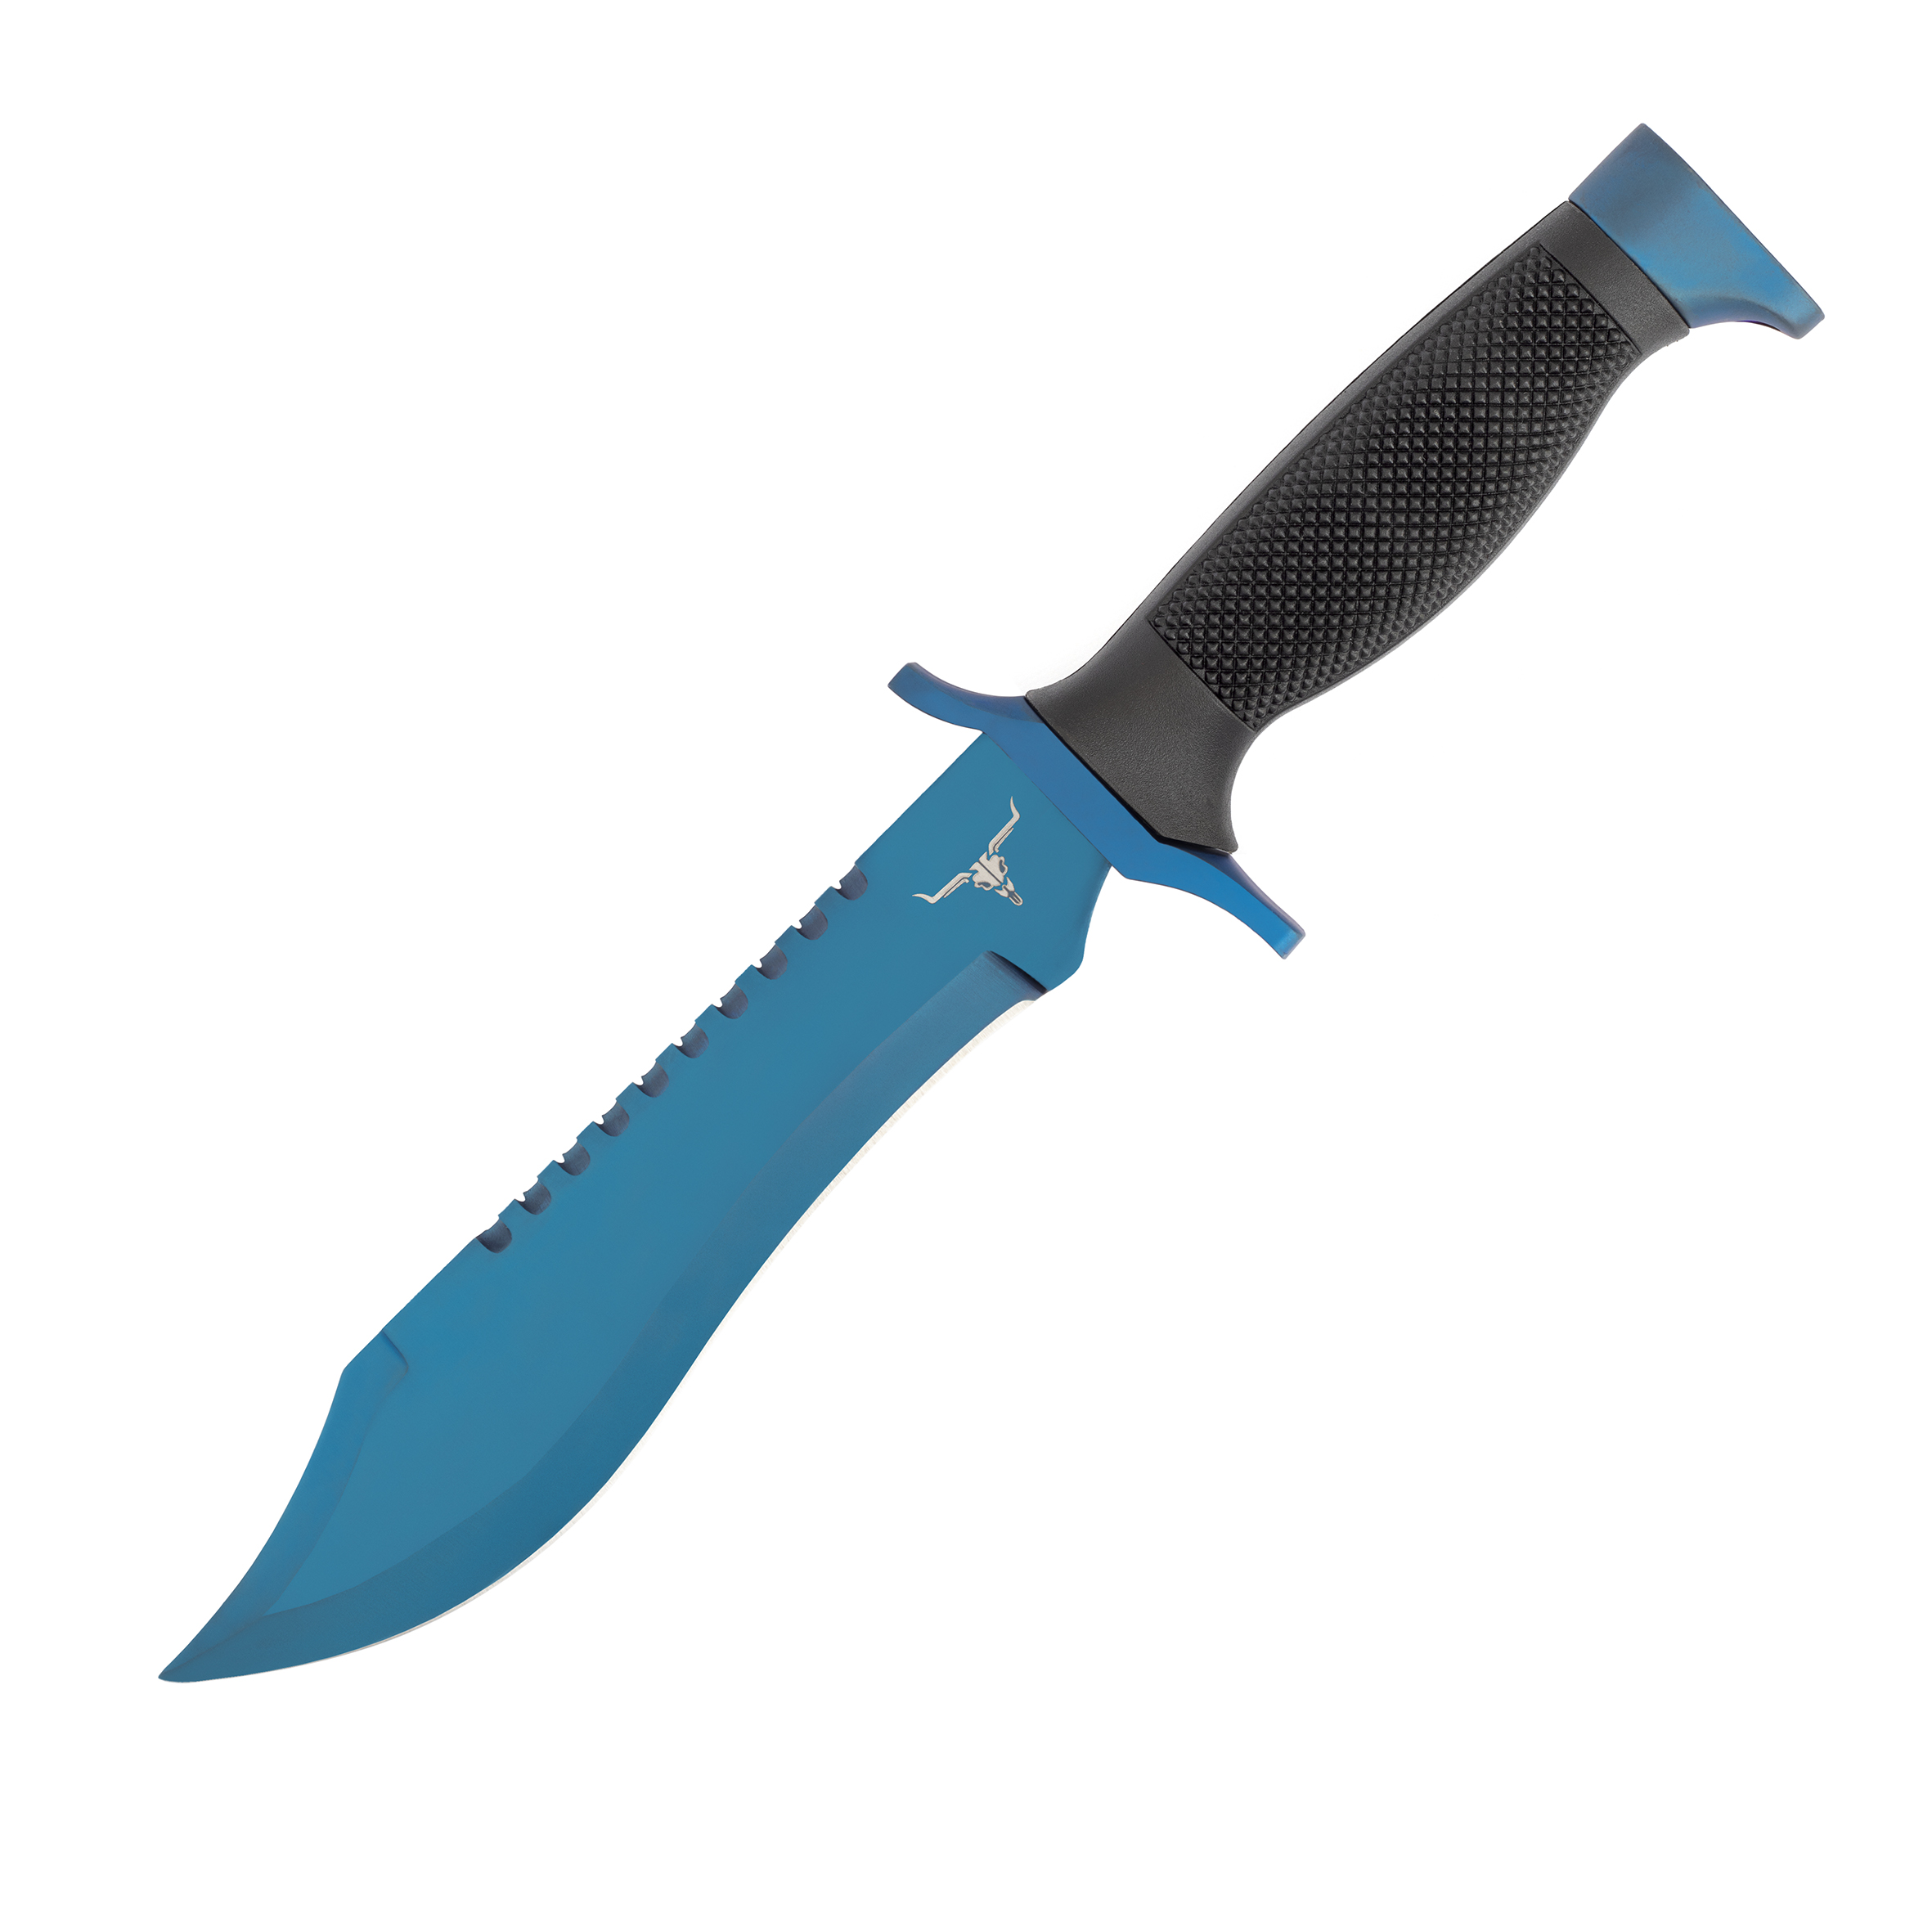 Bowie knife Steel | Real CS:GO custom made IRL LootKnife